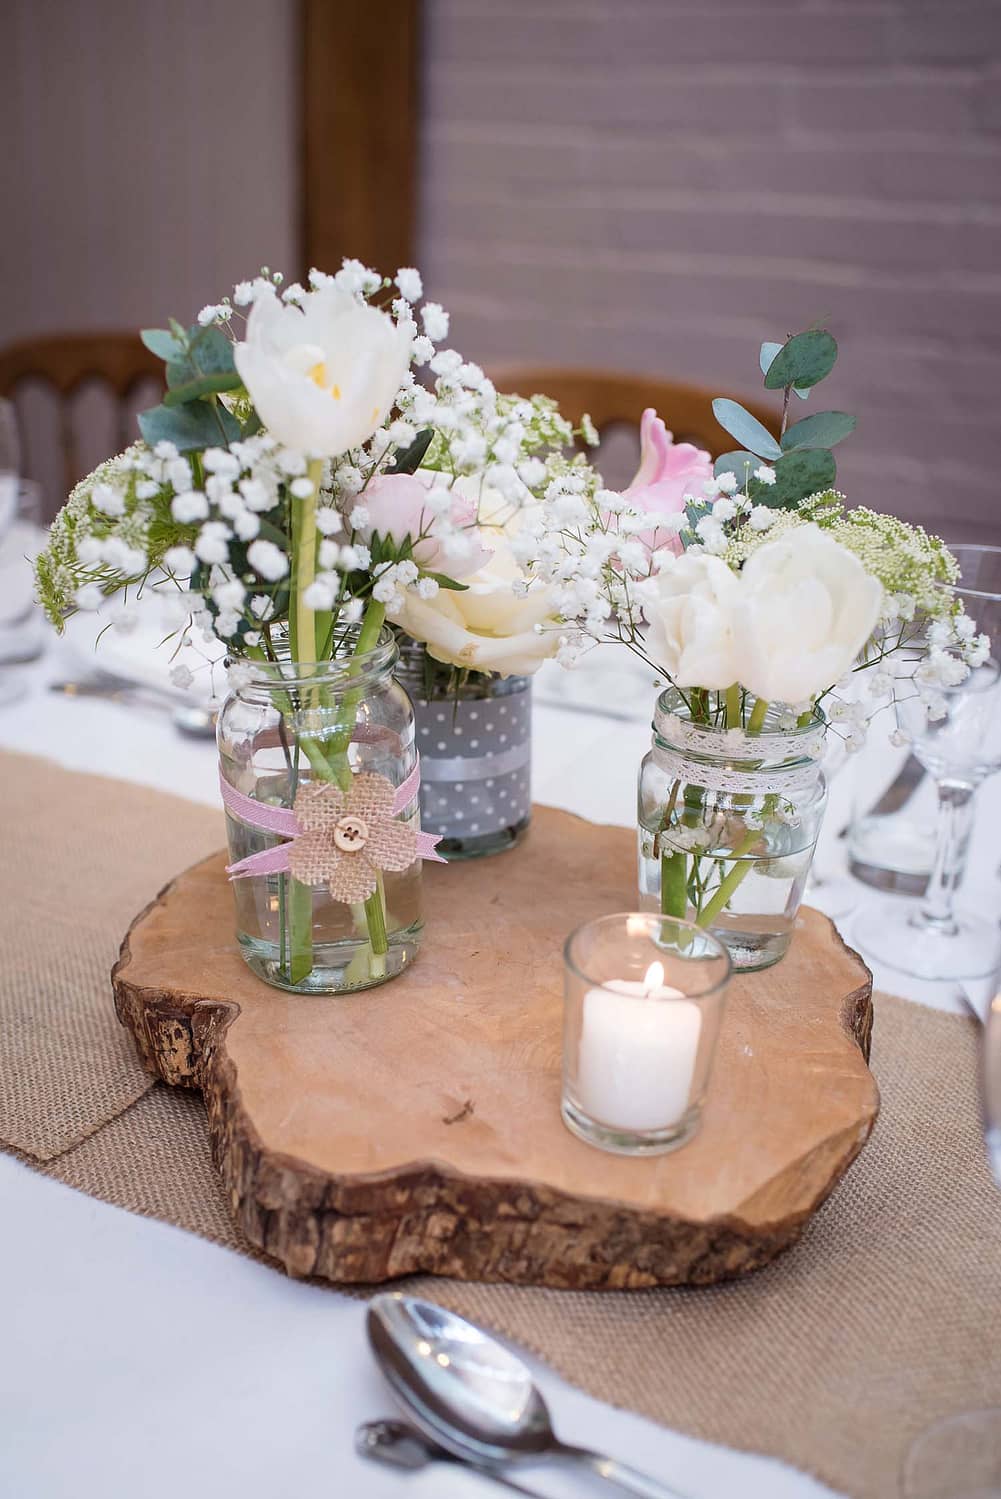 pangdean barn wedding table arrangements